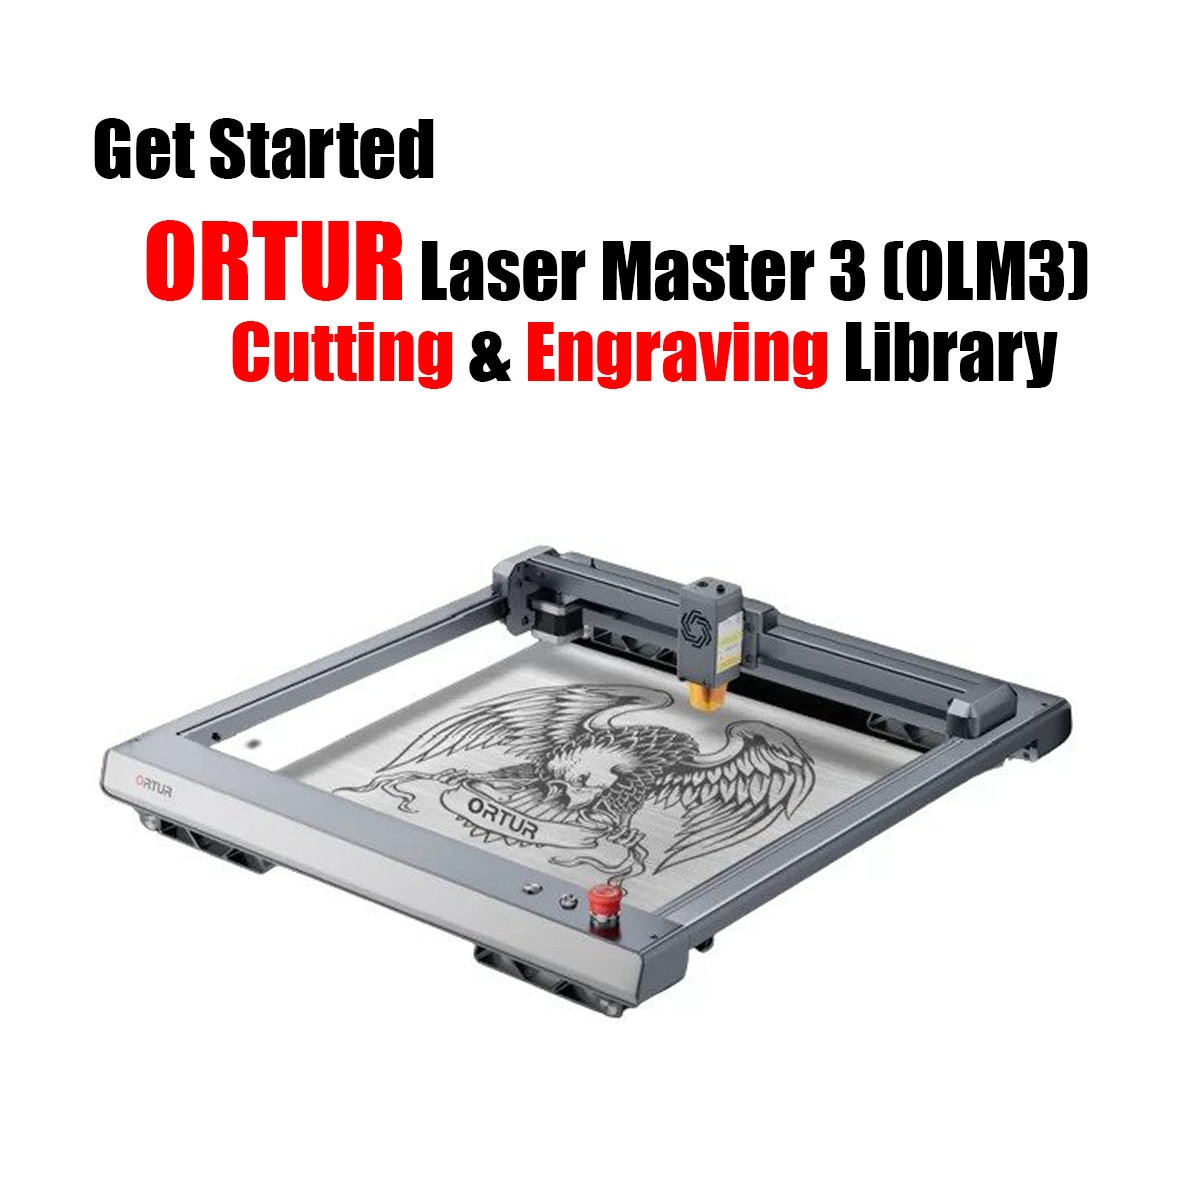 Ortur Laser Master 3 Foldable legs